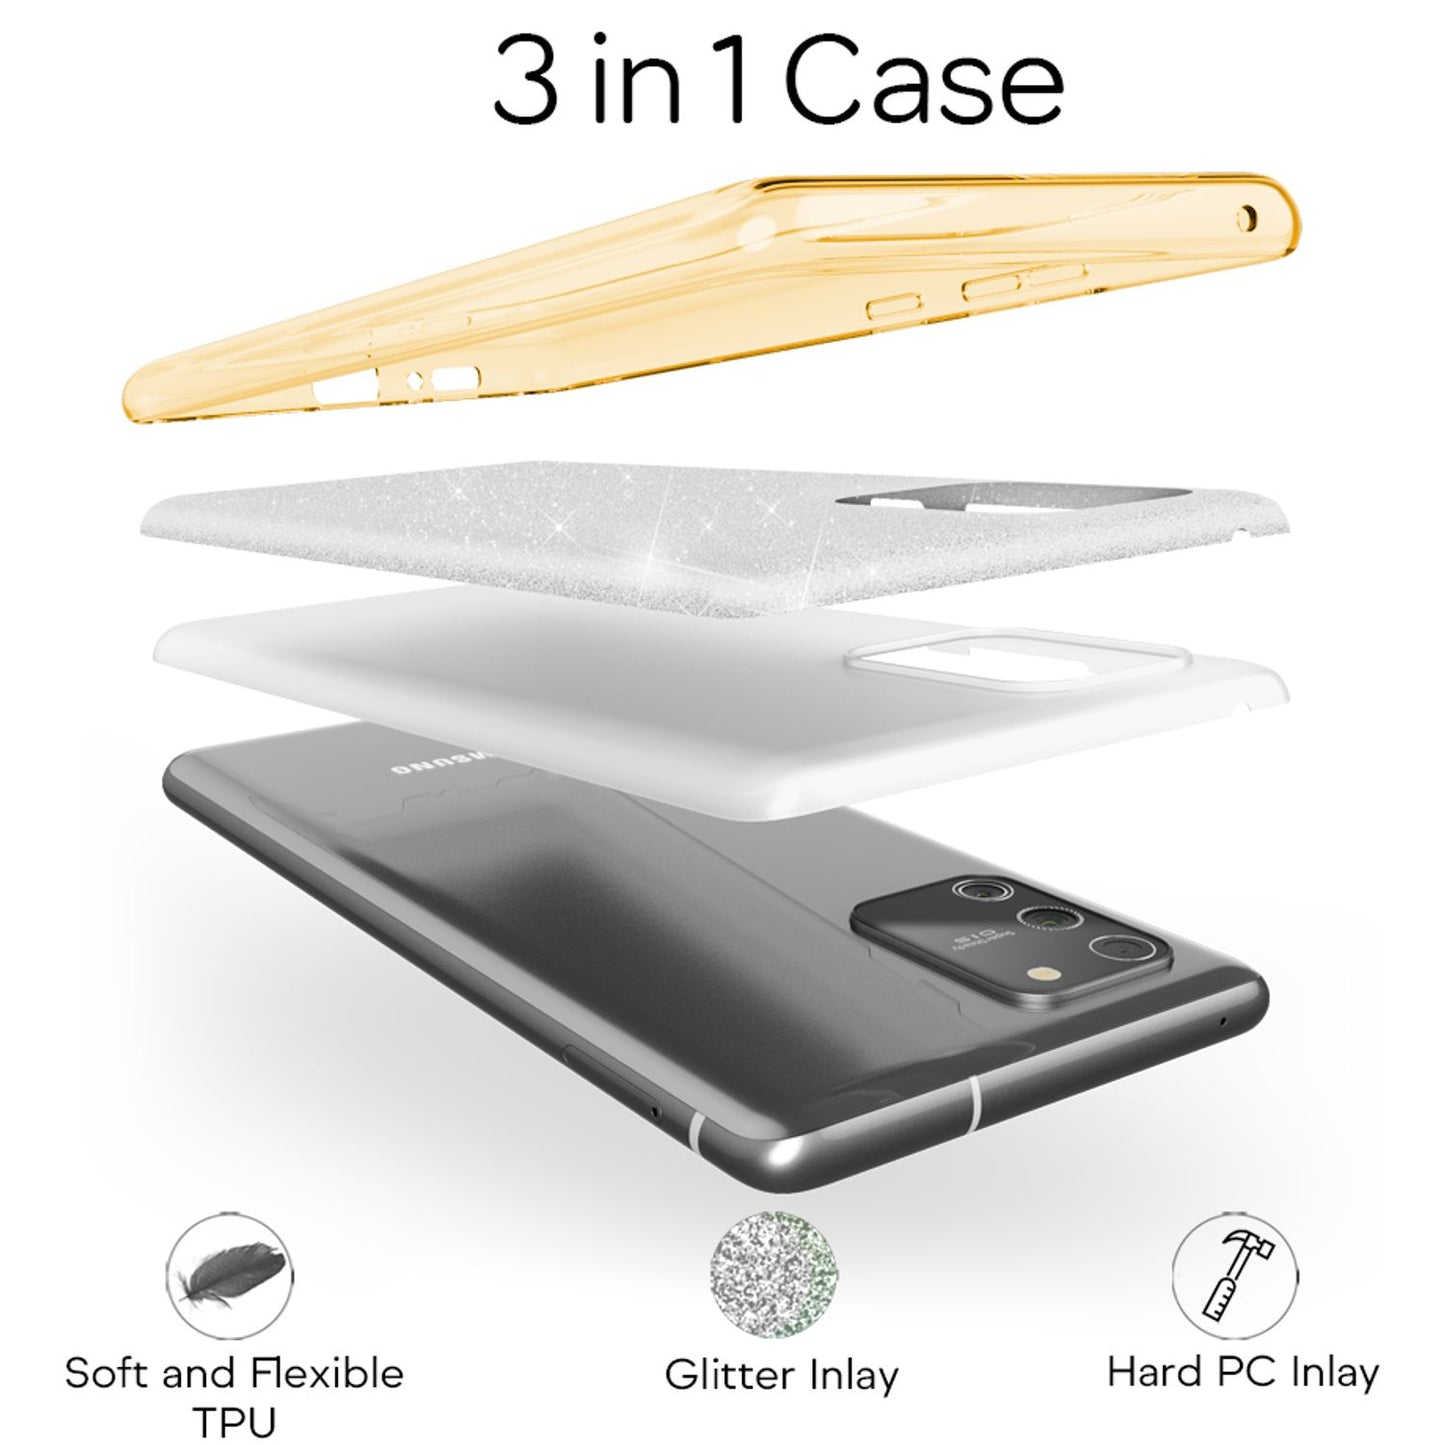 NALIA Glitzer Handy Hülle für Samsung Galaxy S10 Lite, Bling Silikon Cover Case